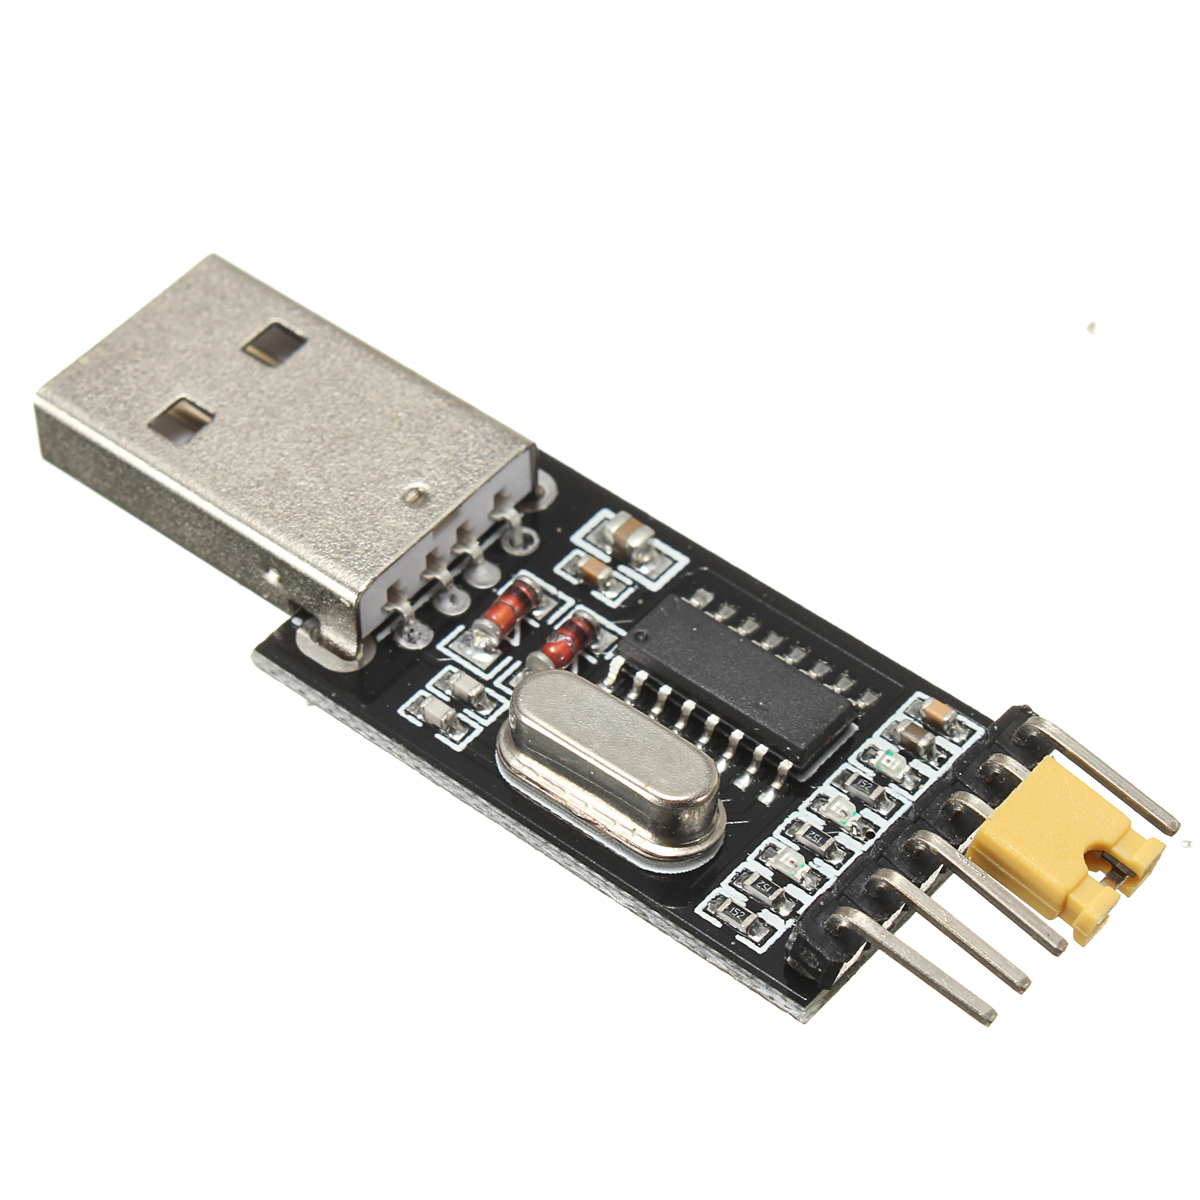 20pcs-33V-5V-USB-to-TTL-Converter-CH340G-UART-Serial-Adapter-Module-STC-1314968-3